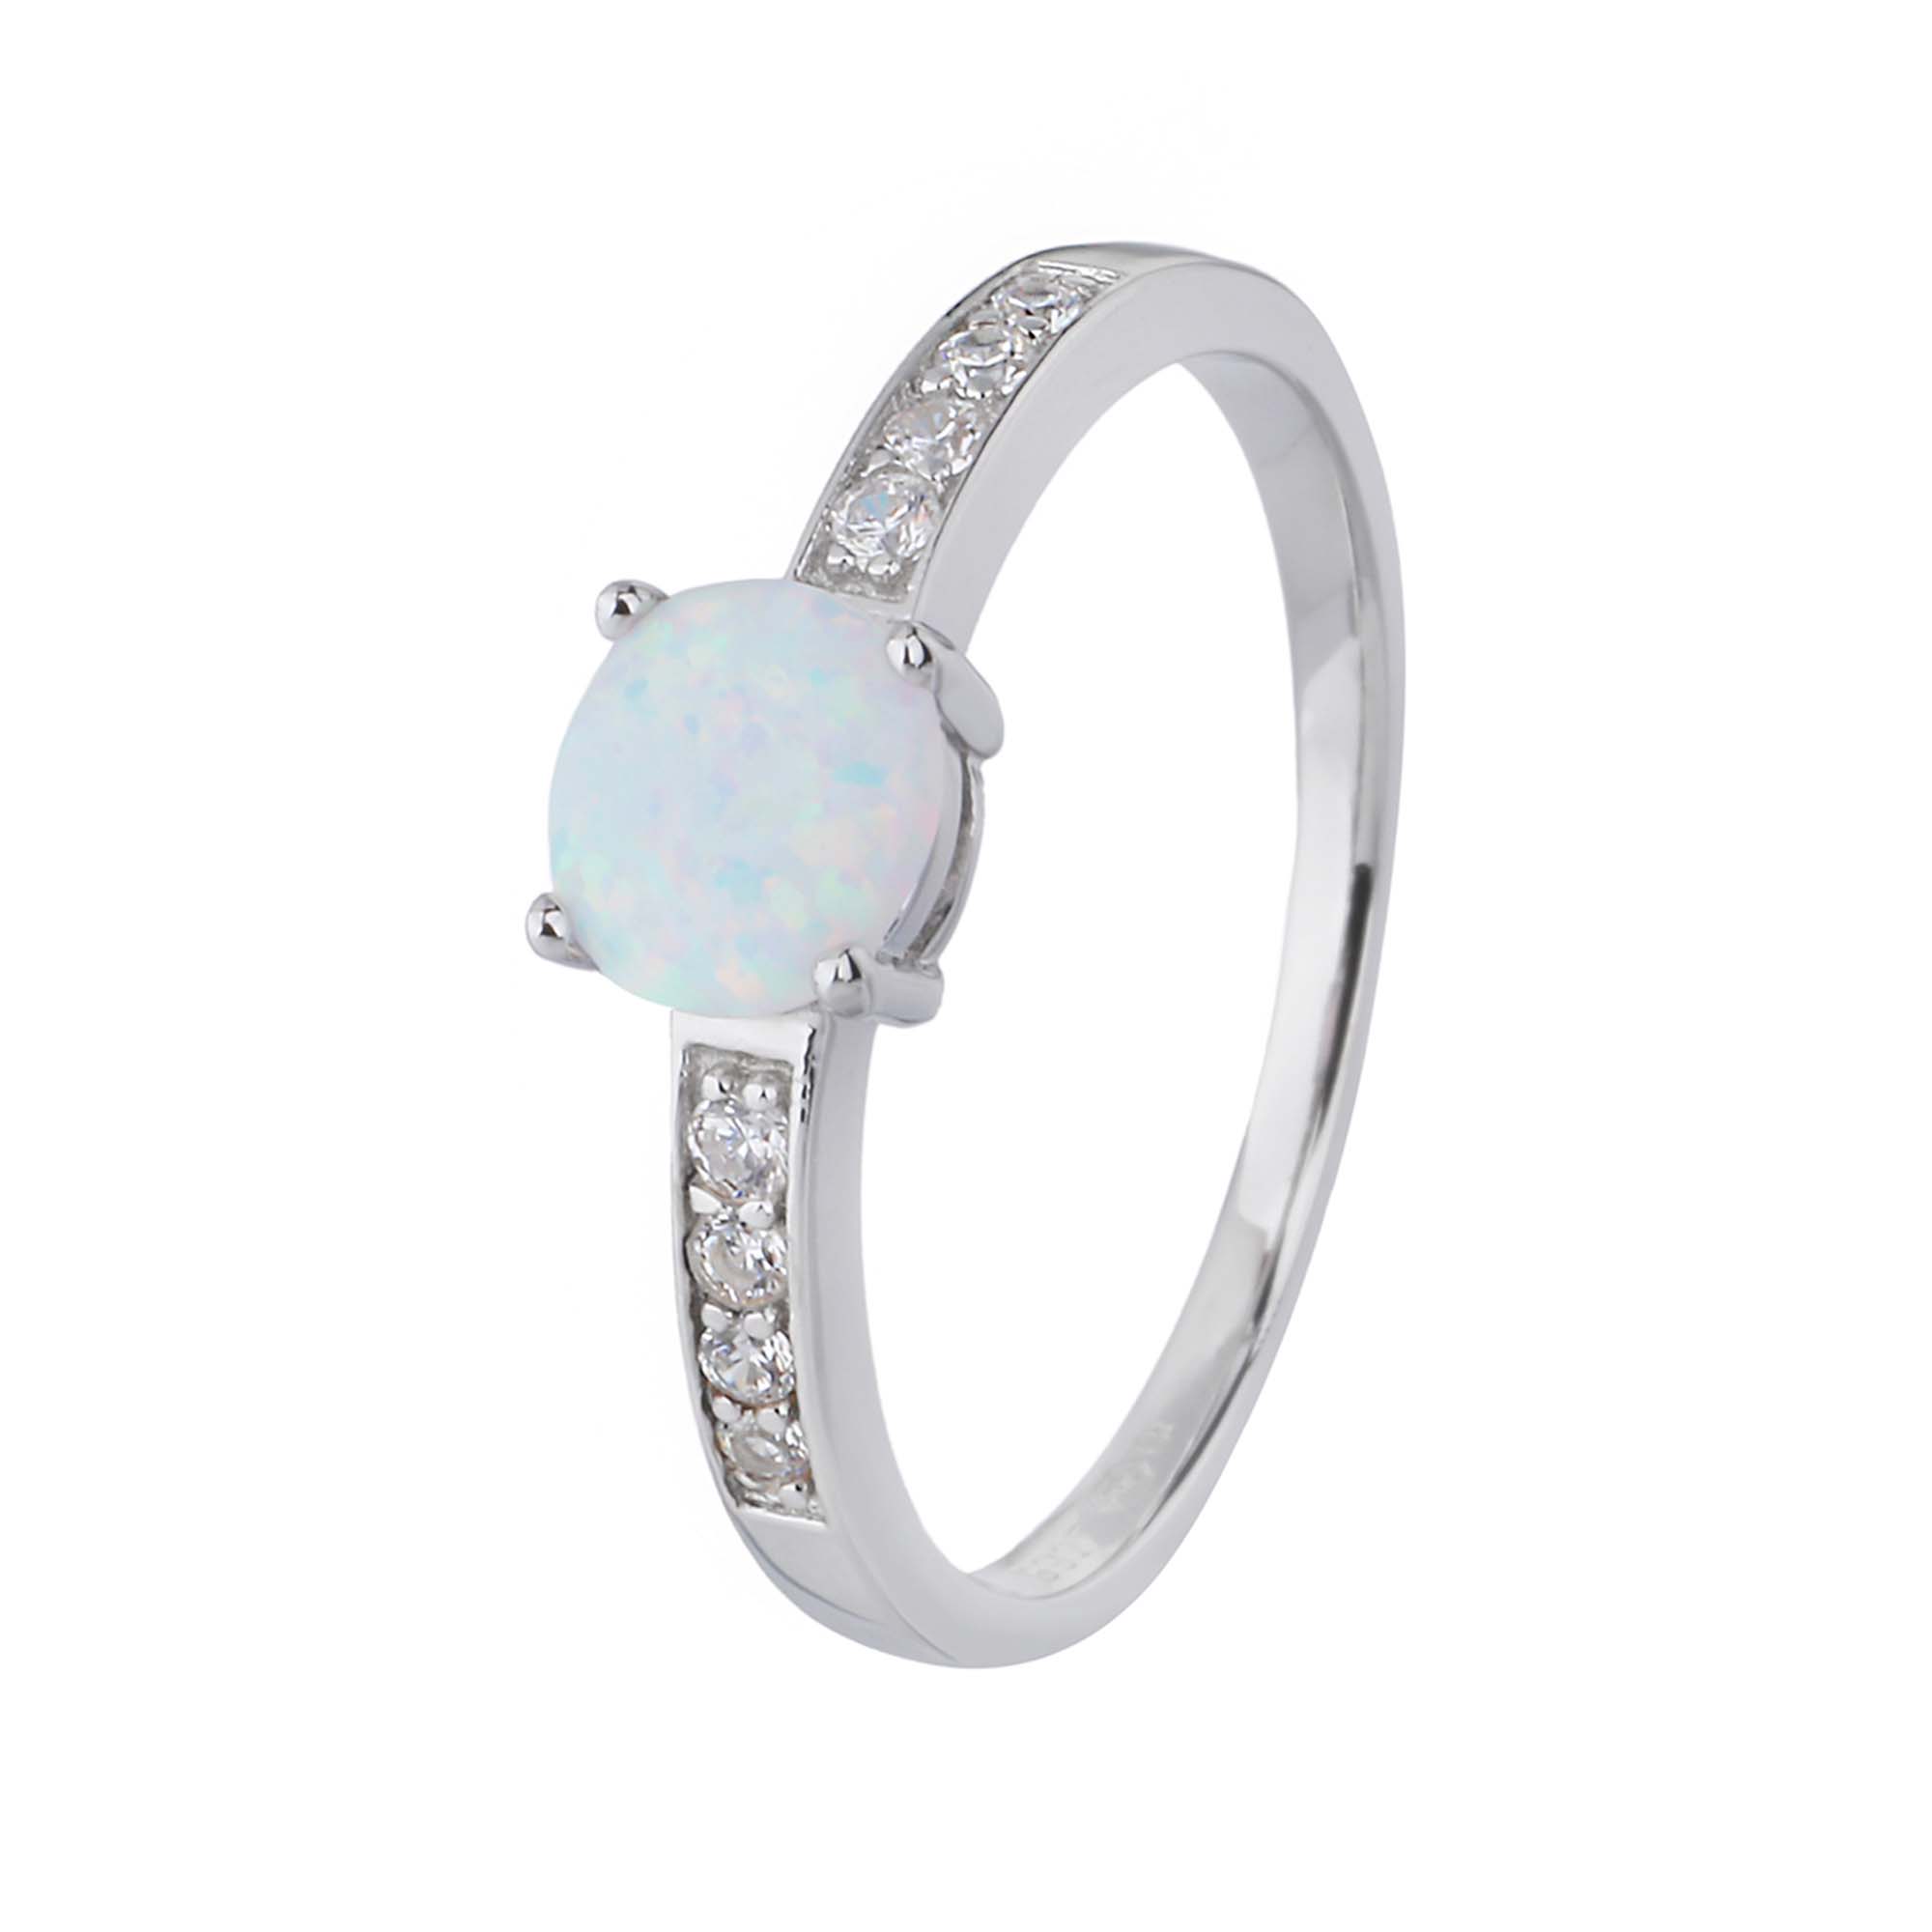 Stříbrný prsten SOLITÉR bílý OPÁL Velikost prstenu: 55 Ag 925/1000